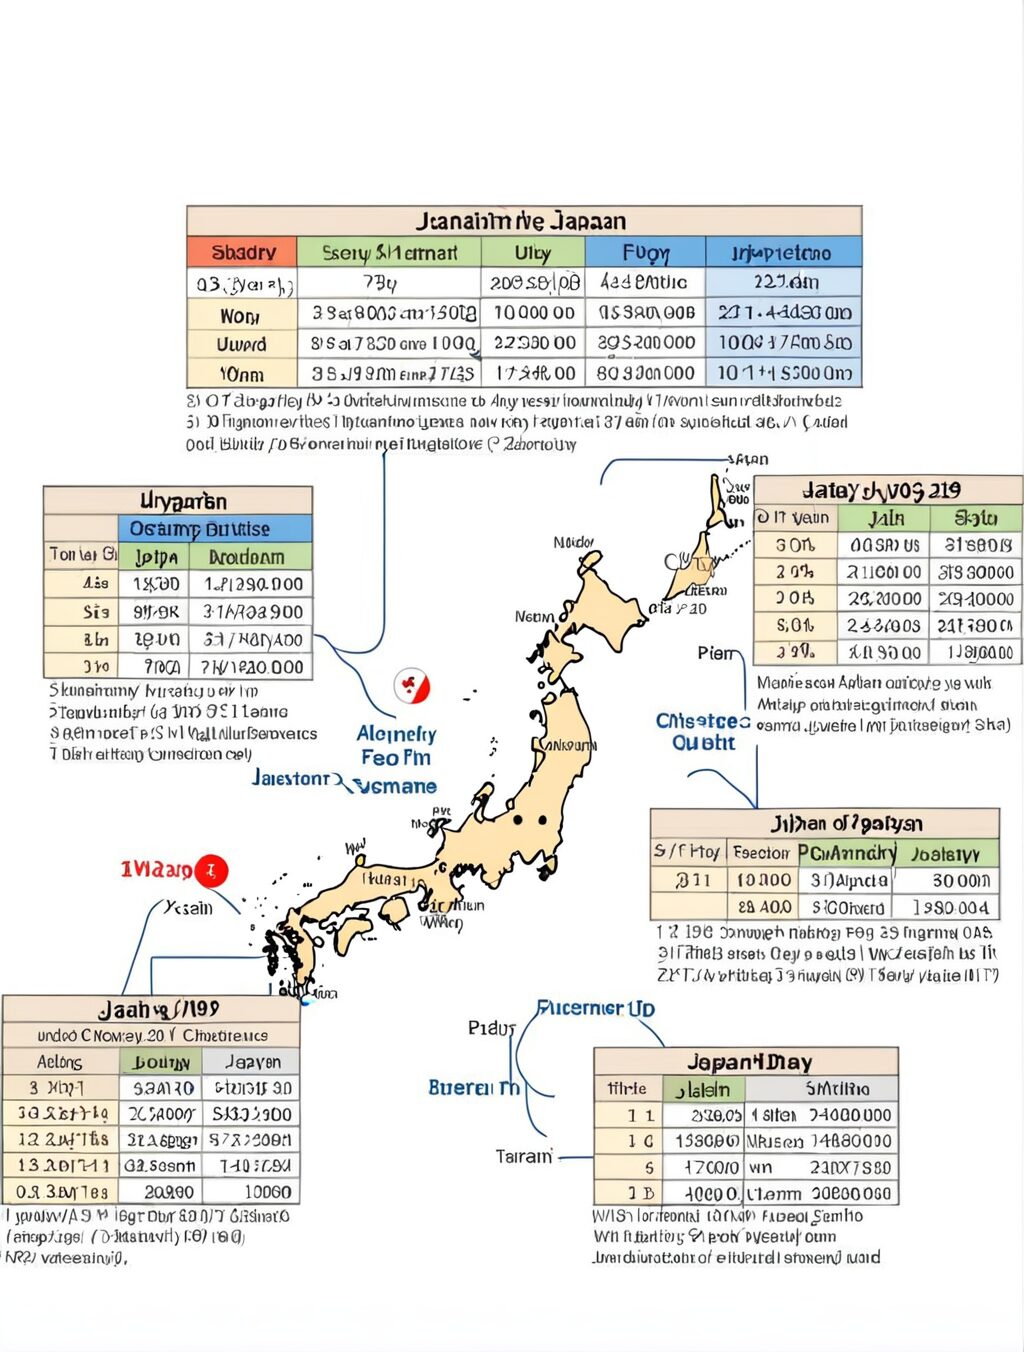 japan 9 day itinerary reddit